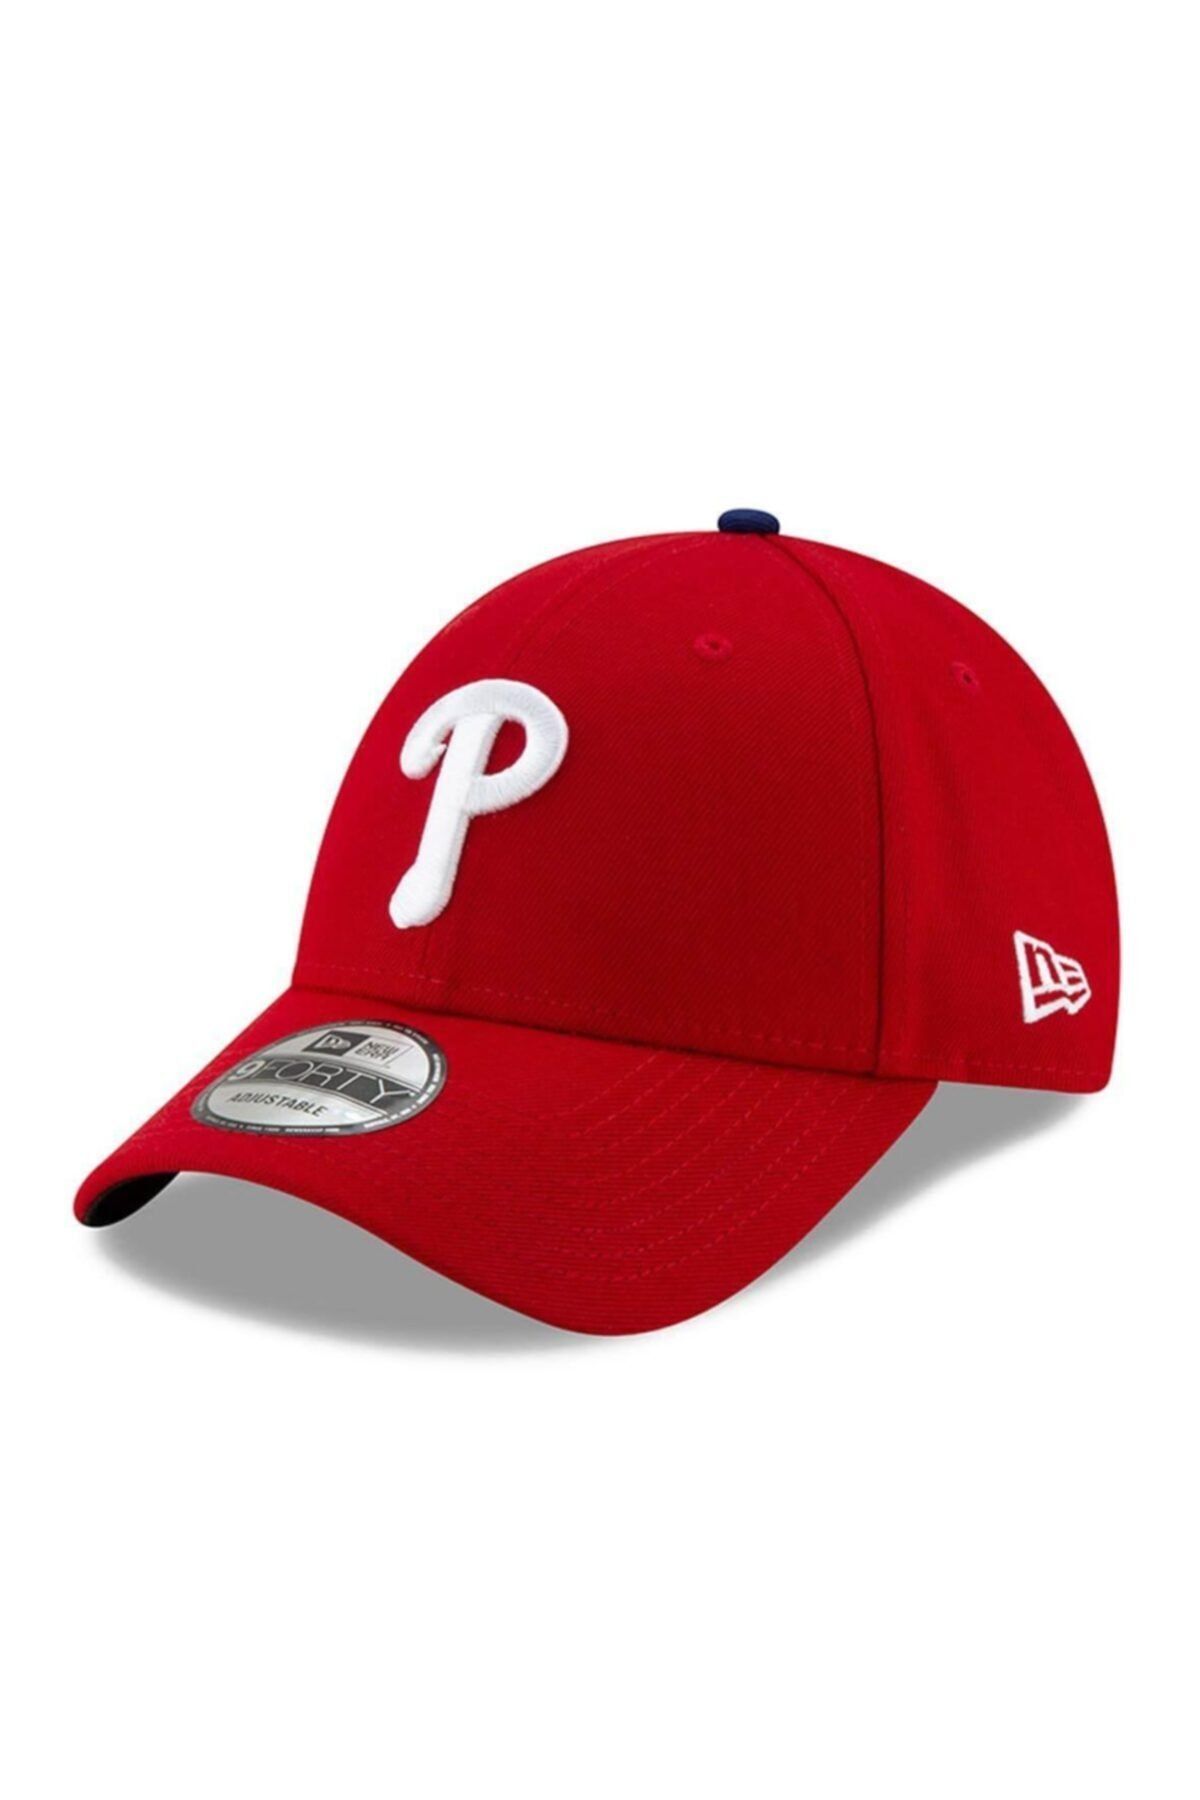 NEW ERA کلاه MLB لیگ فیلادلفیا فیلیز قرمز